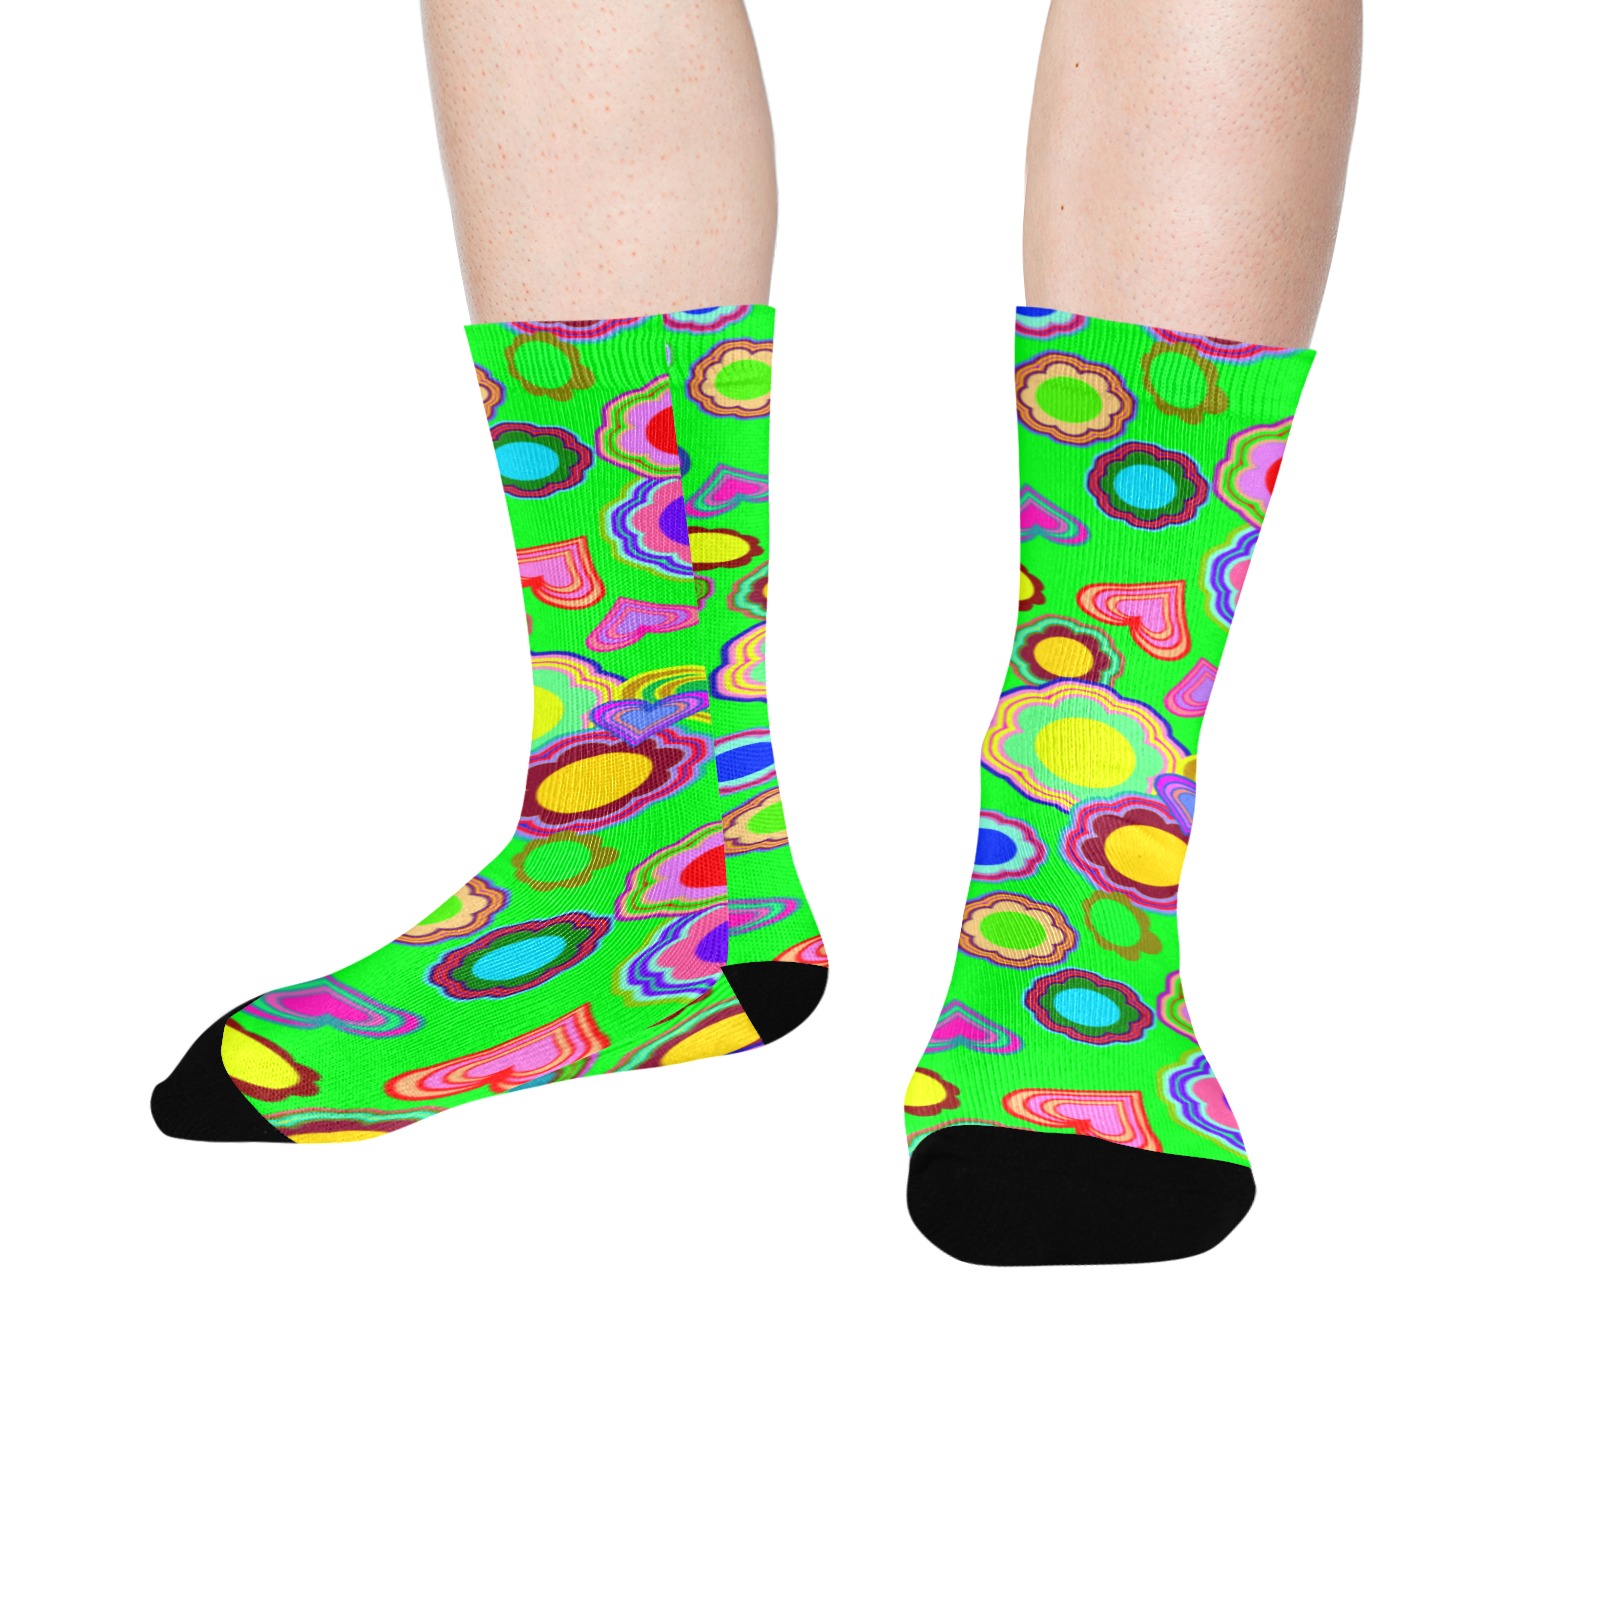 Groovy Hearts and Flowers Green Trouser Socks (For Men)